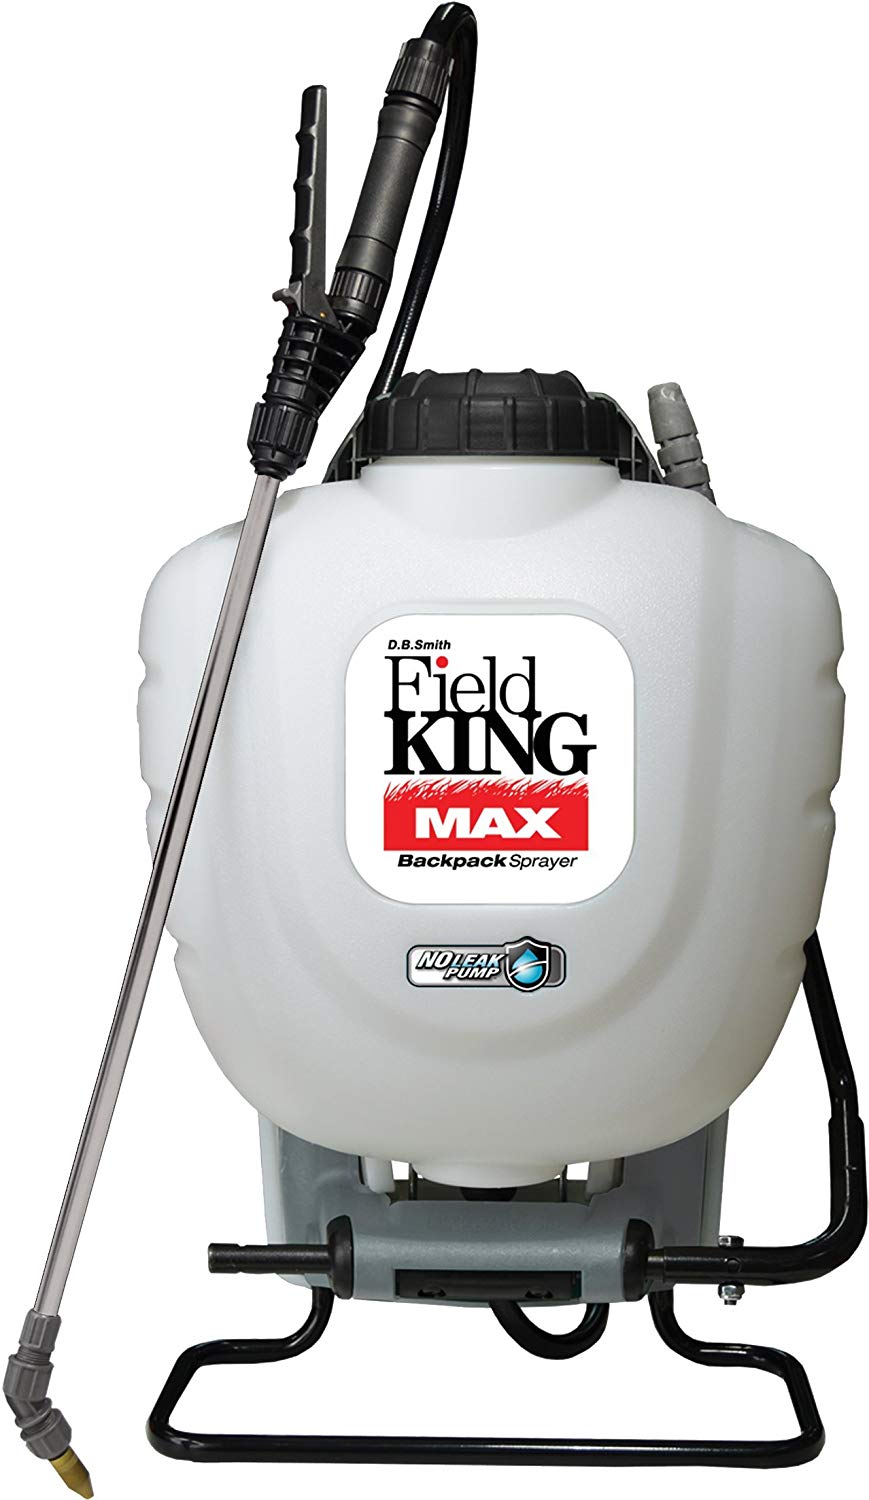  Field King Max 190348 Backpack Sprayer